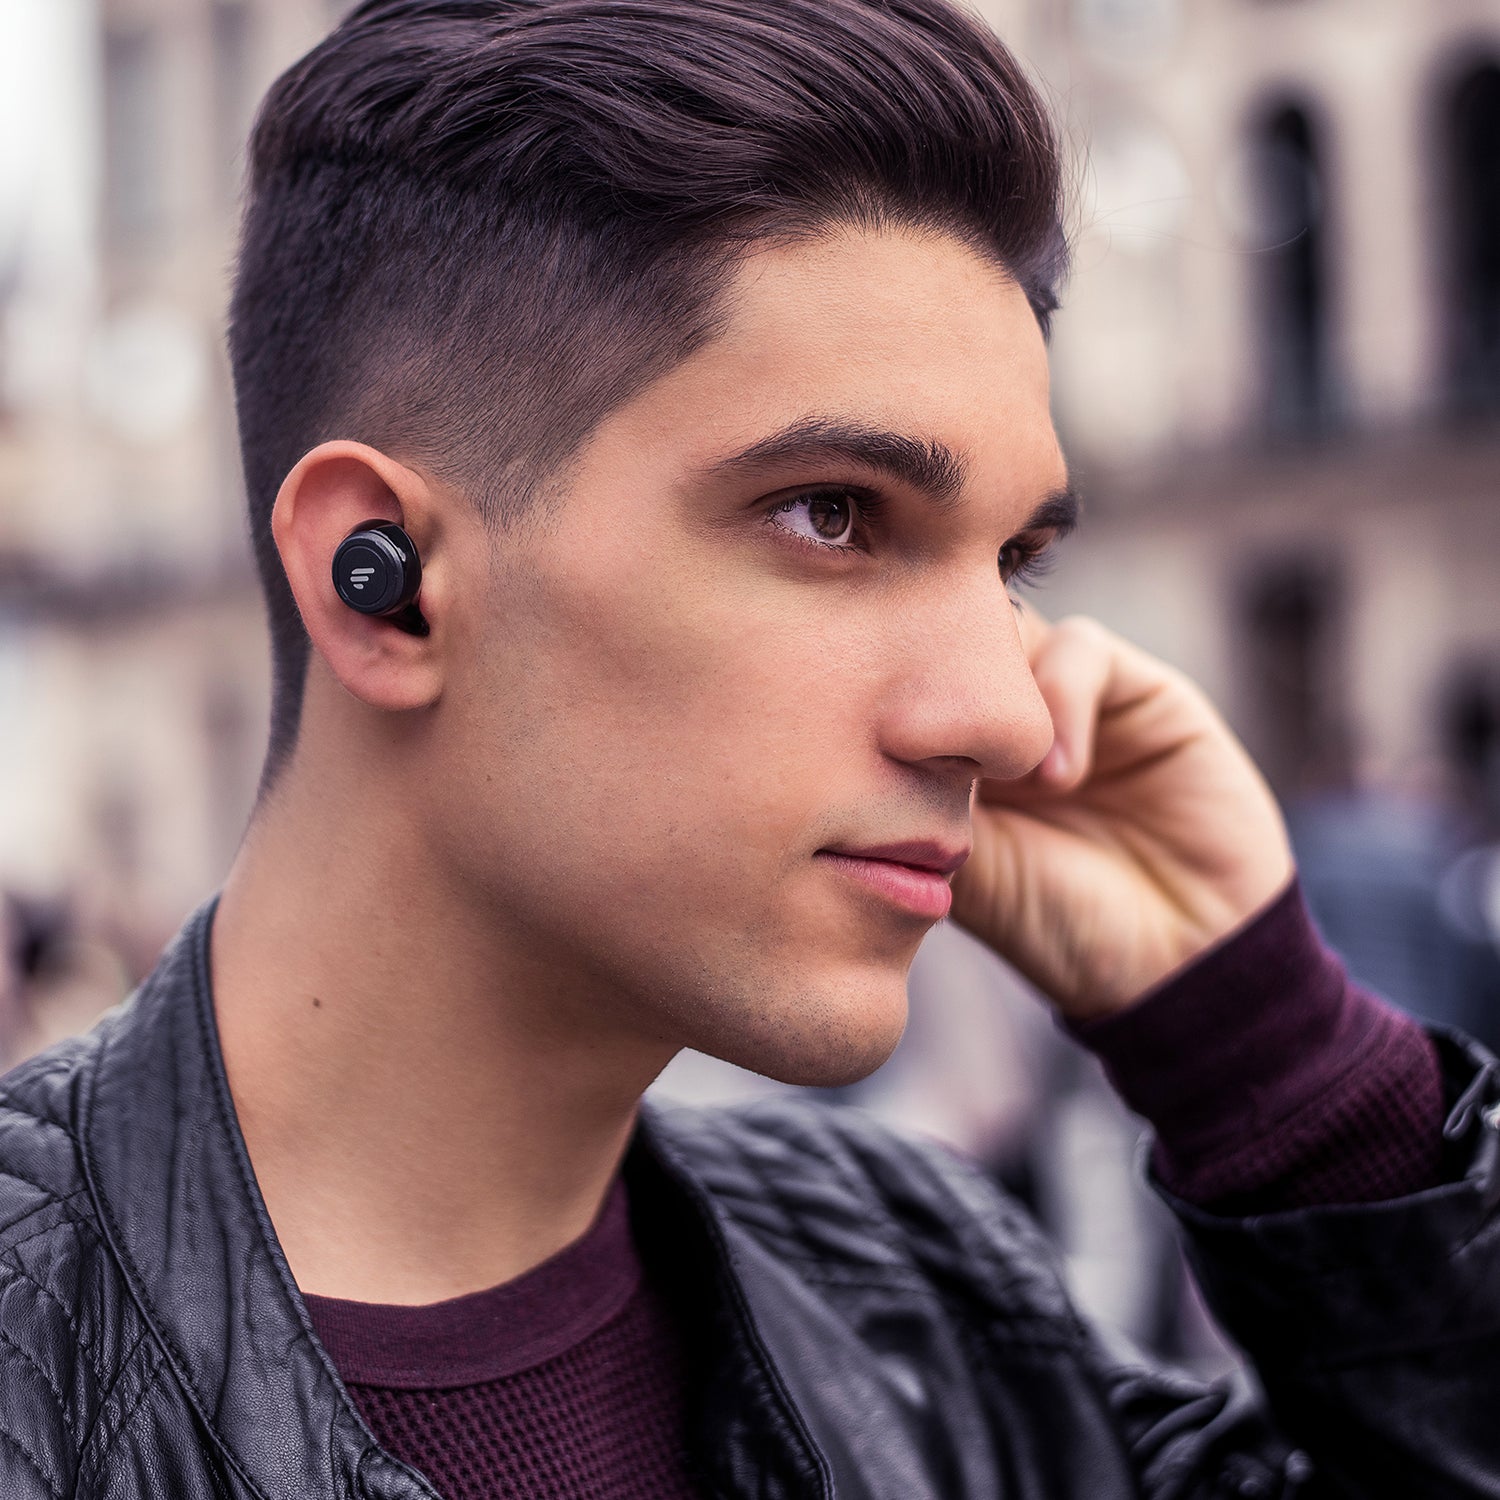 TWS5 True Wireless Earbuds Untether your listening experience